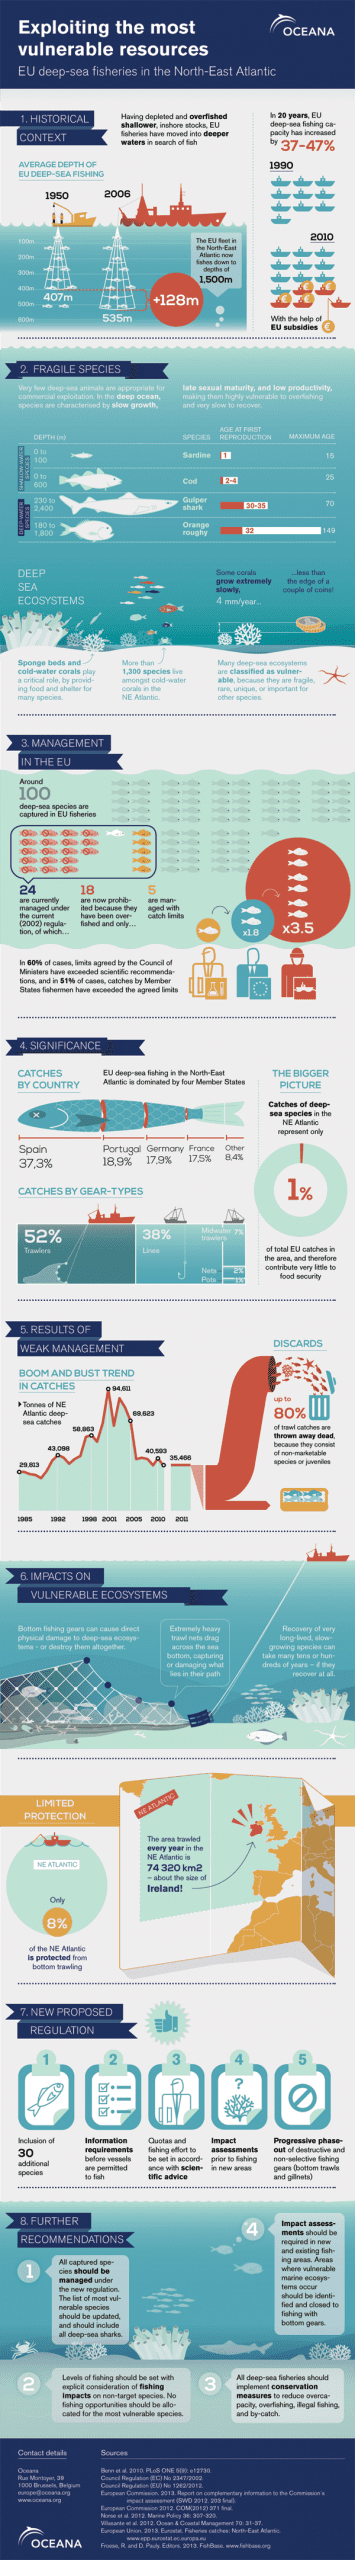 Oceana Europe deep sea fishery infographic